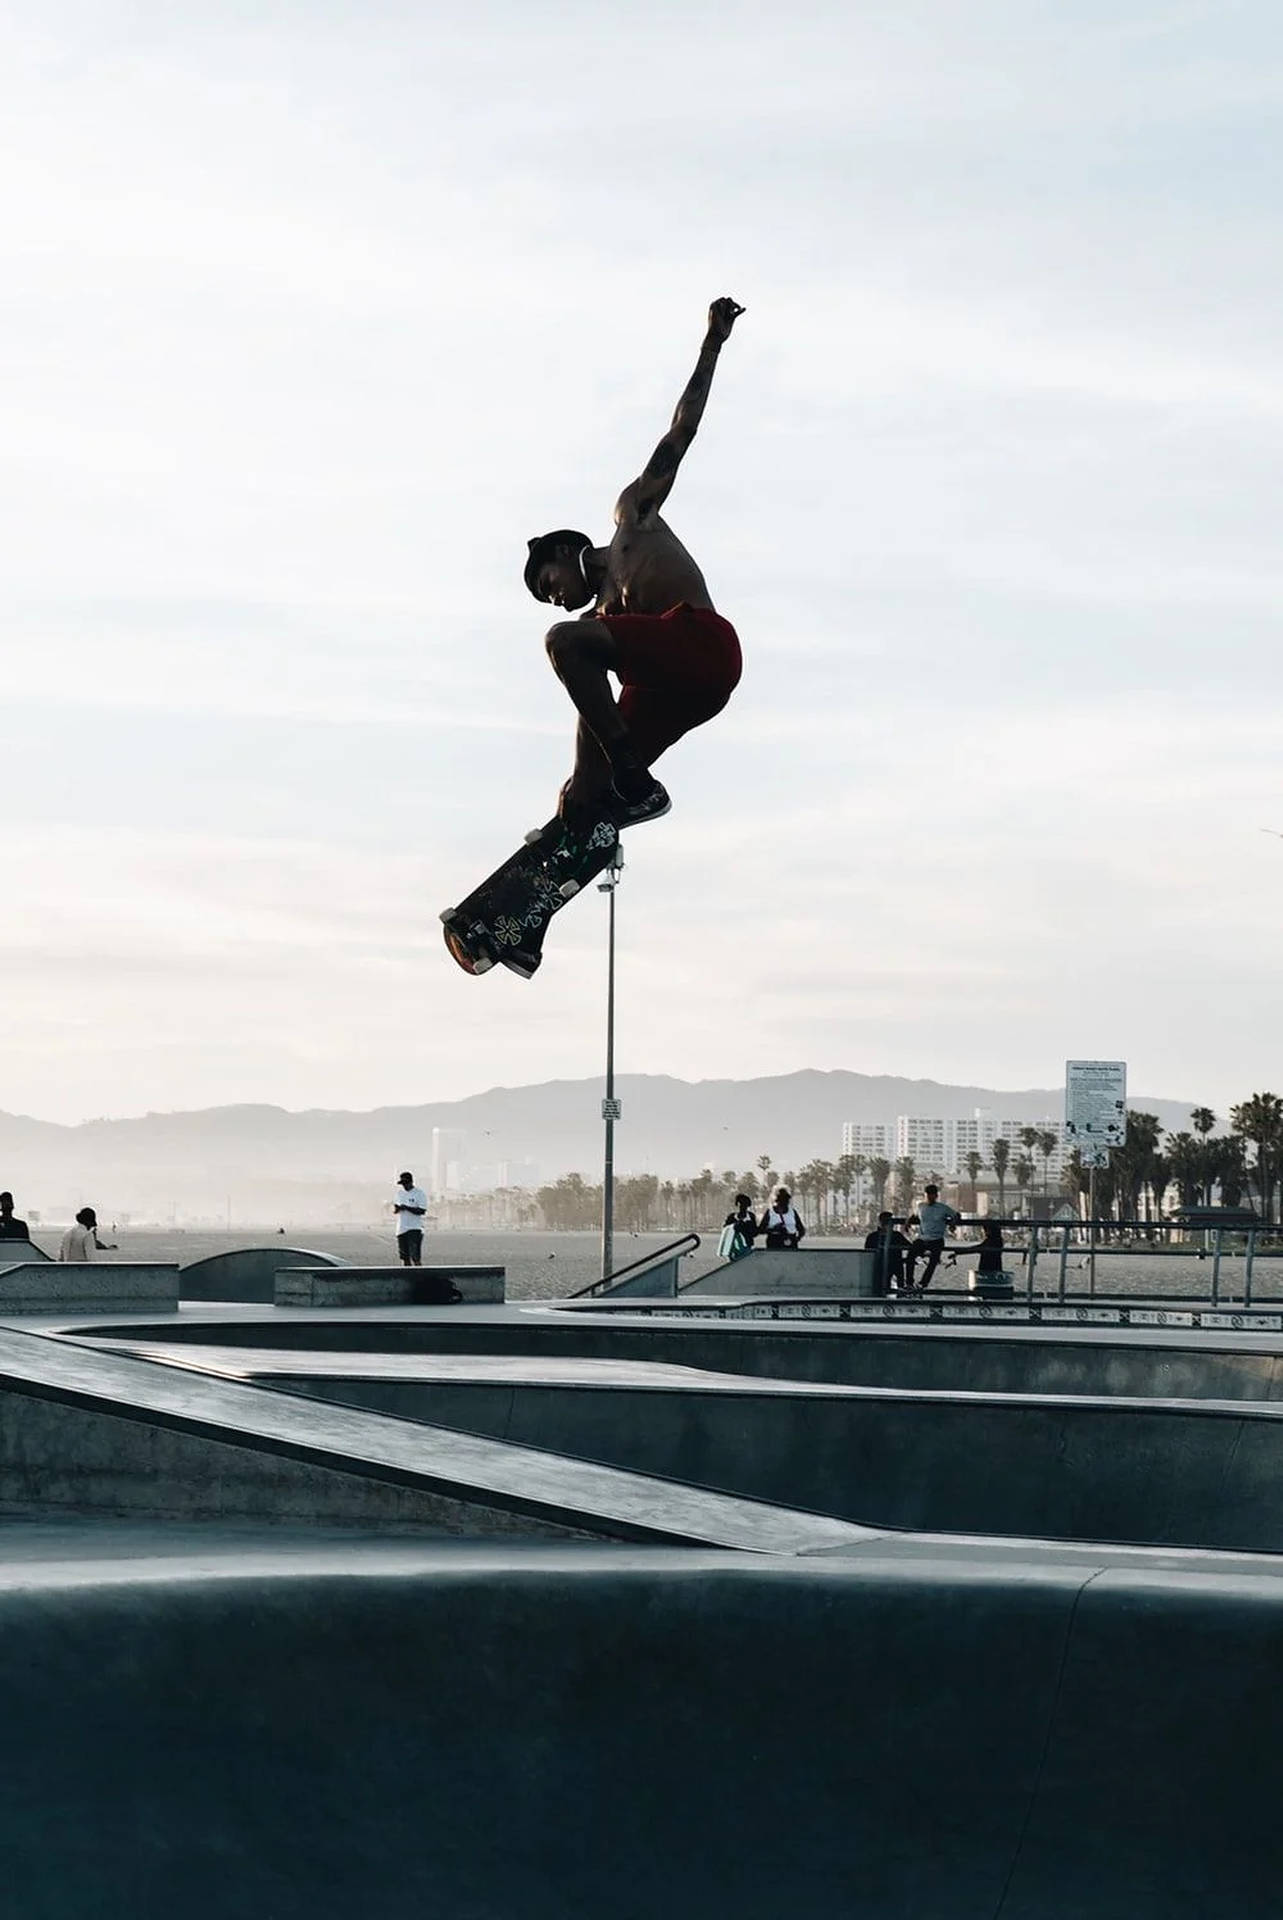 Captivating Skater Boy Performing Midair Trick Background